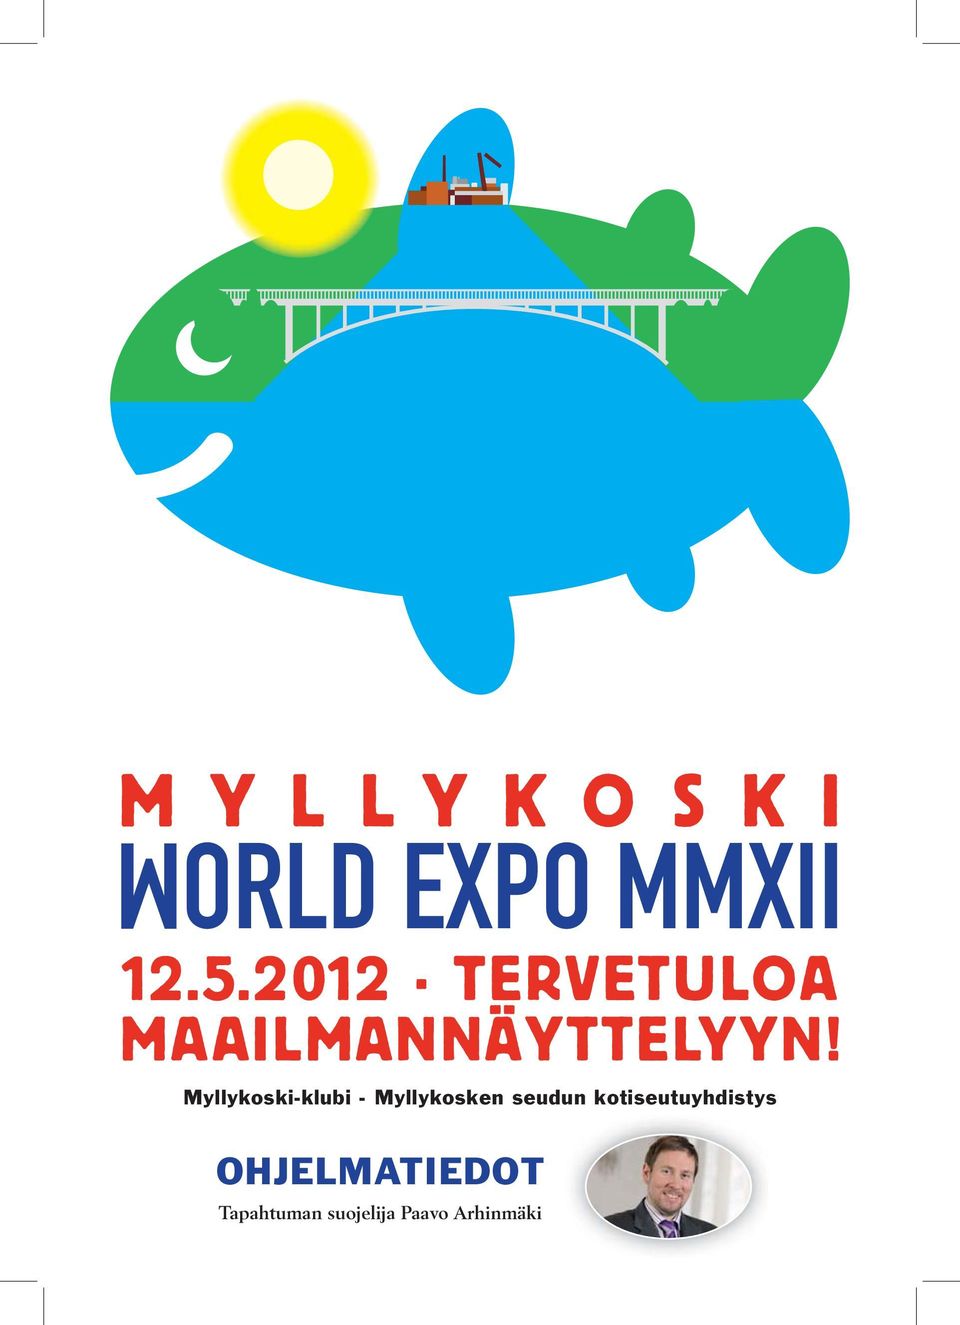 Myllykoski-klubi - Myllykosken seudun